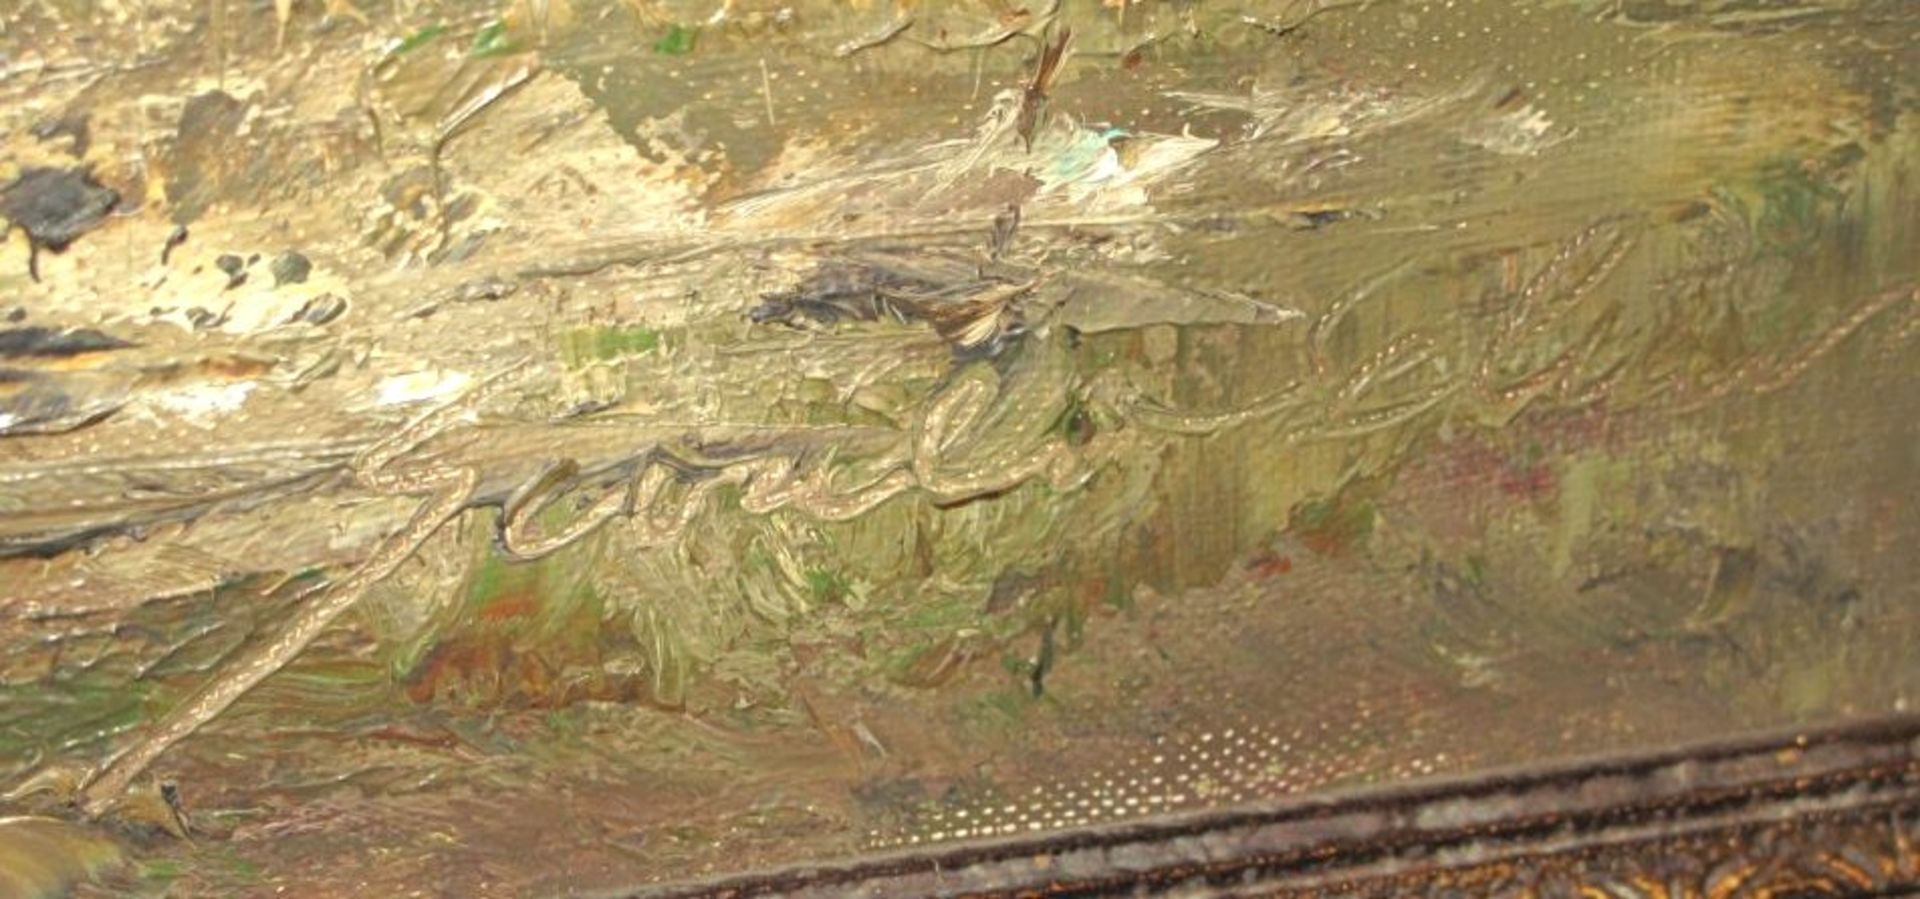 unleserl.signiert "Seenlandschaft", Öl/Leinwand, gut gerahmt, RG 88 x 118cm. - Bild 2 aus 3